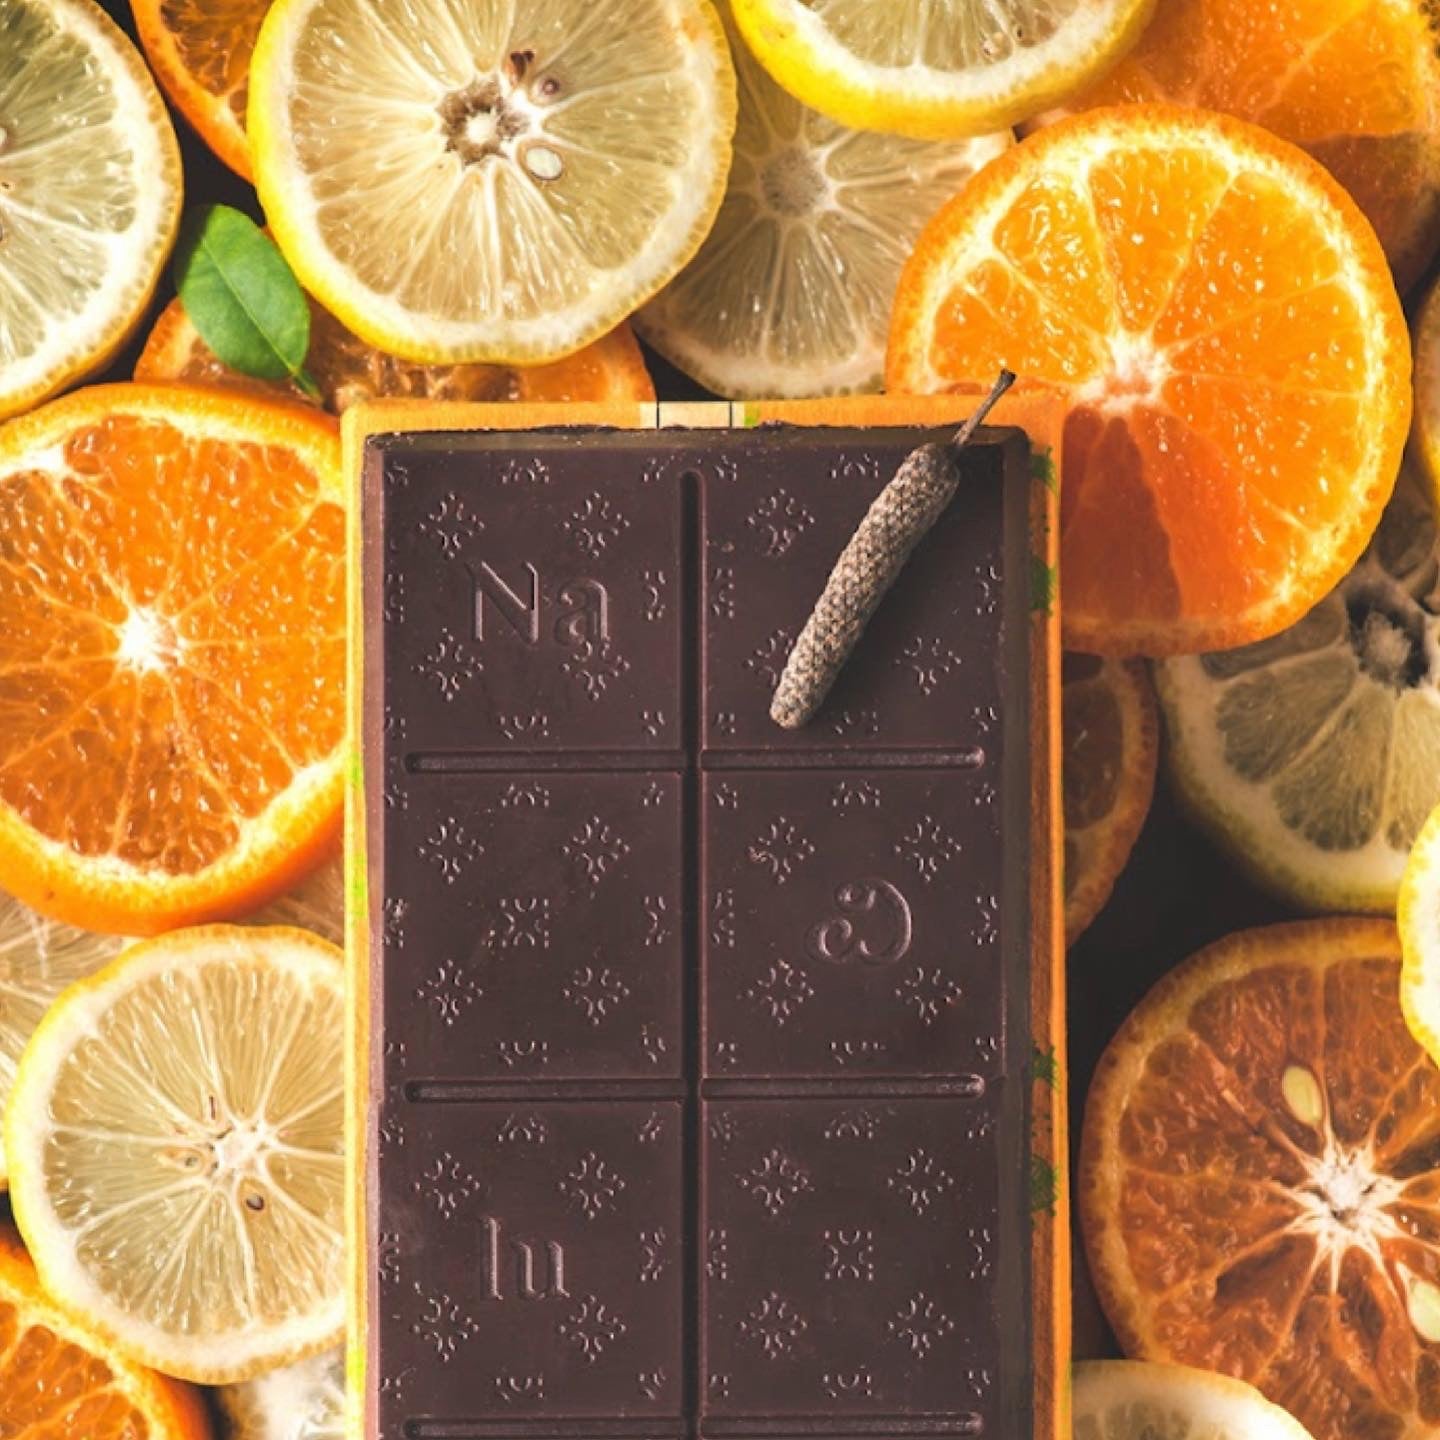 NAVILUNA 72% Longum Pepper Lime & Orange Chocolate Bar